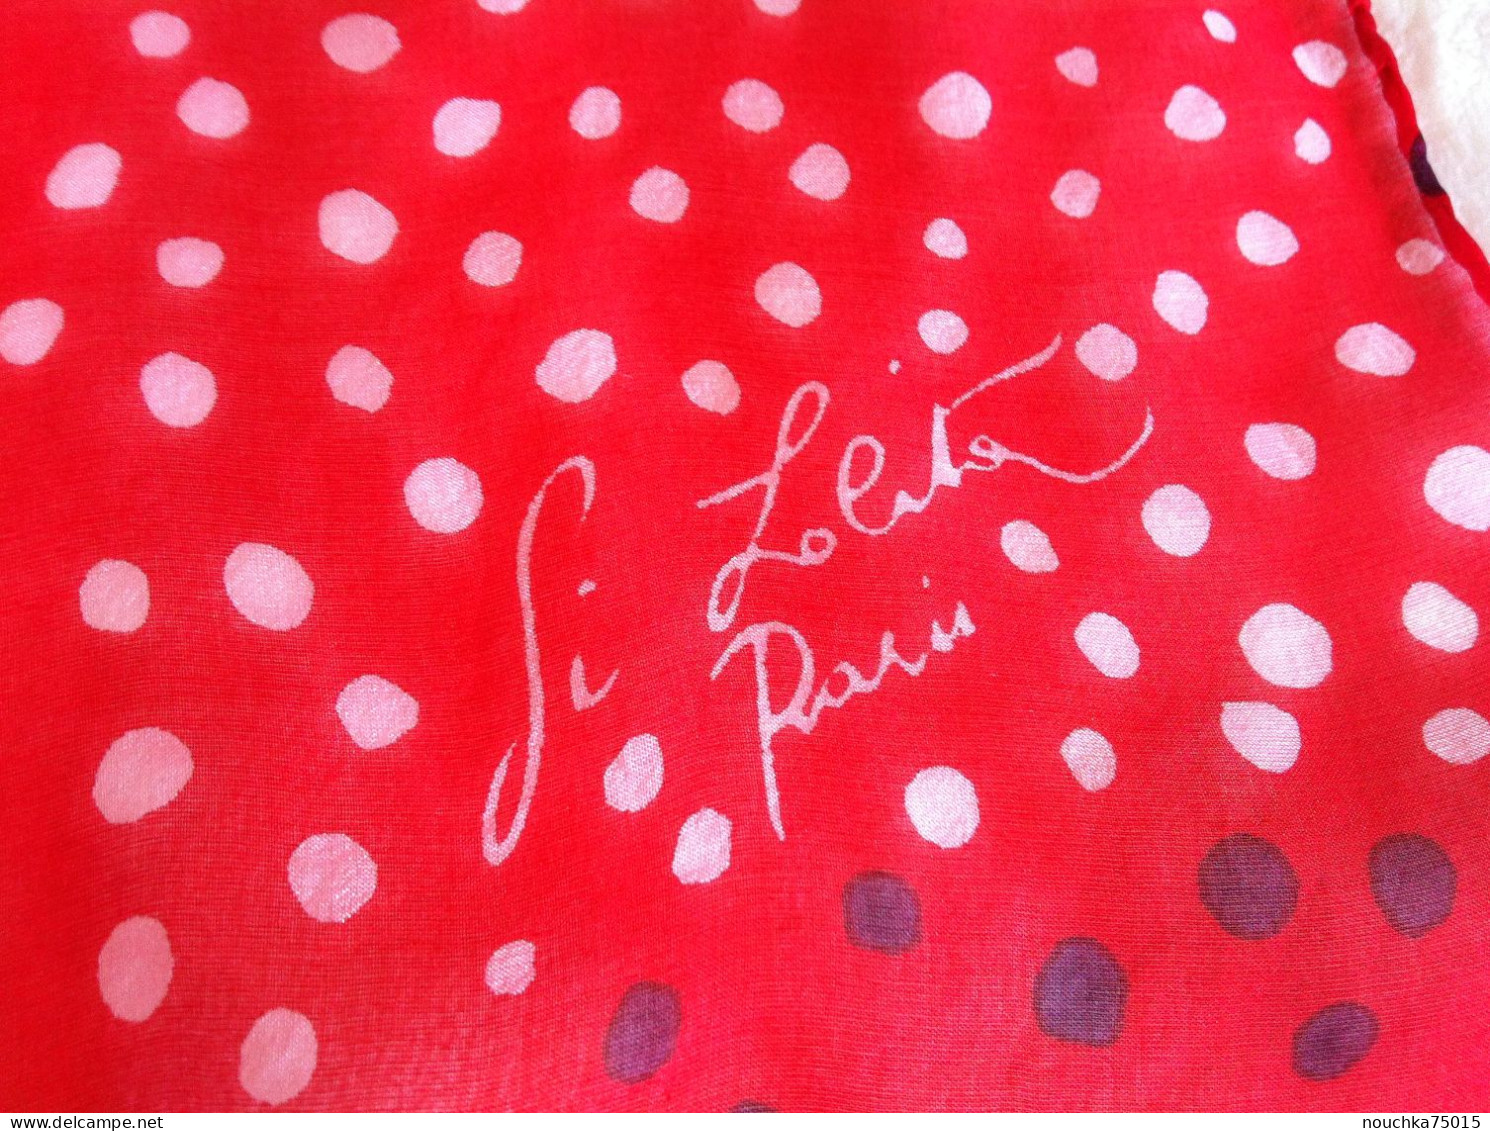 Lolita Lempicka - Si, Lolita, lot de 2 foulards neufs